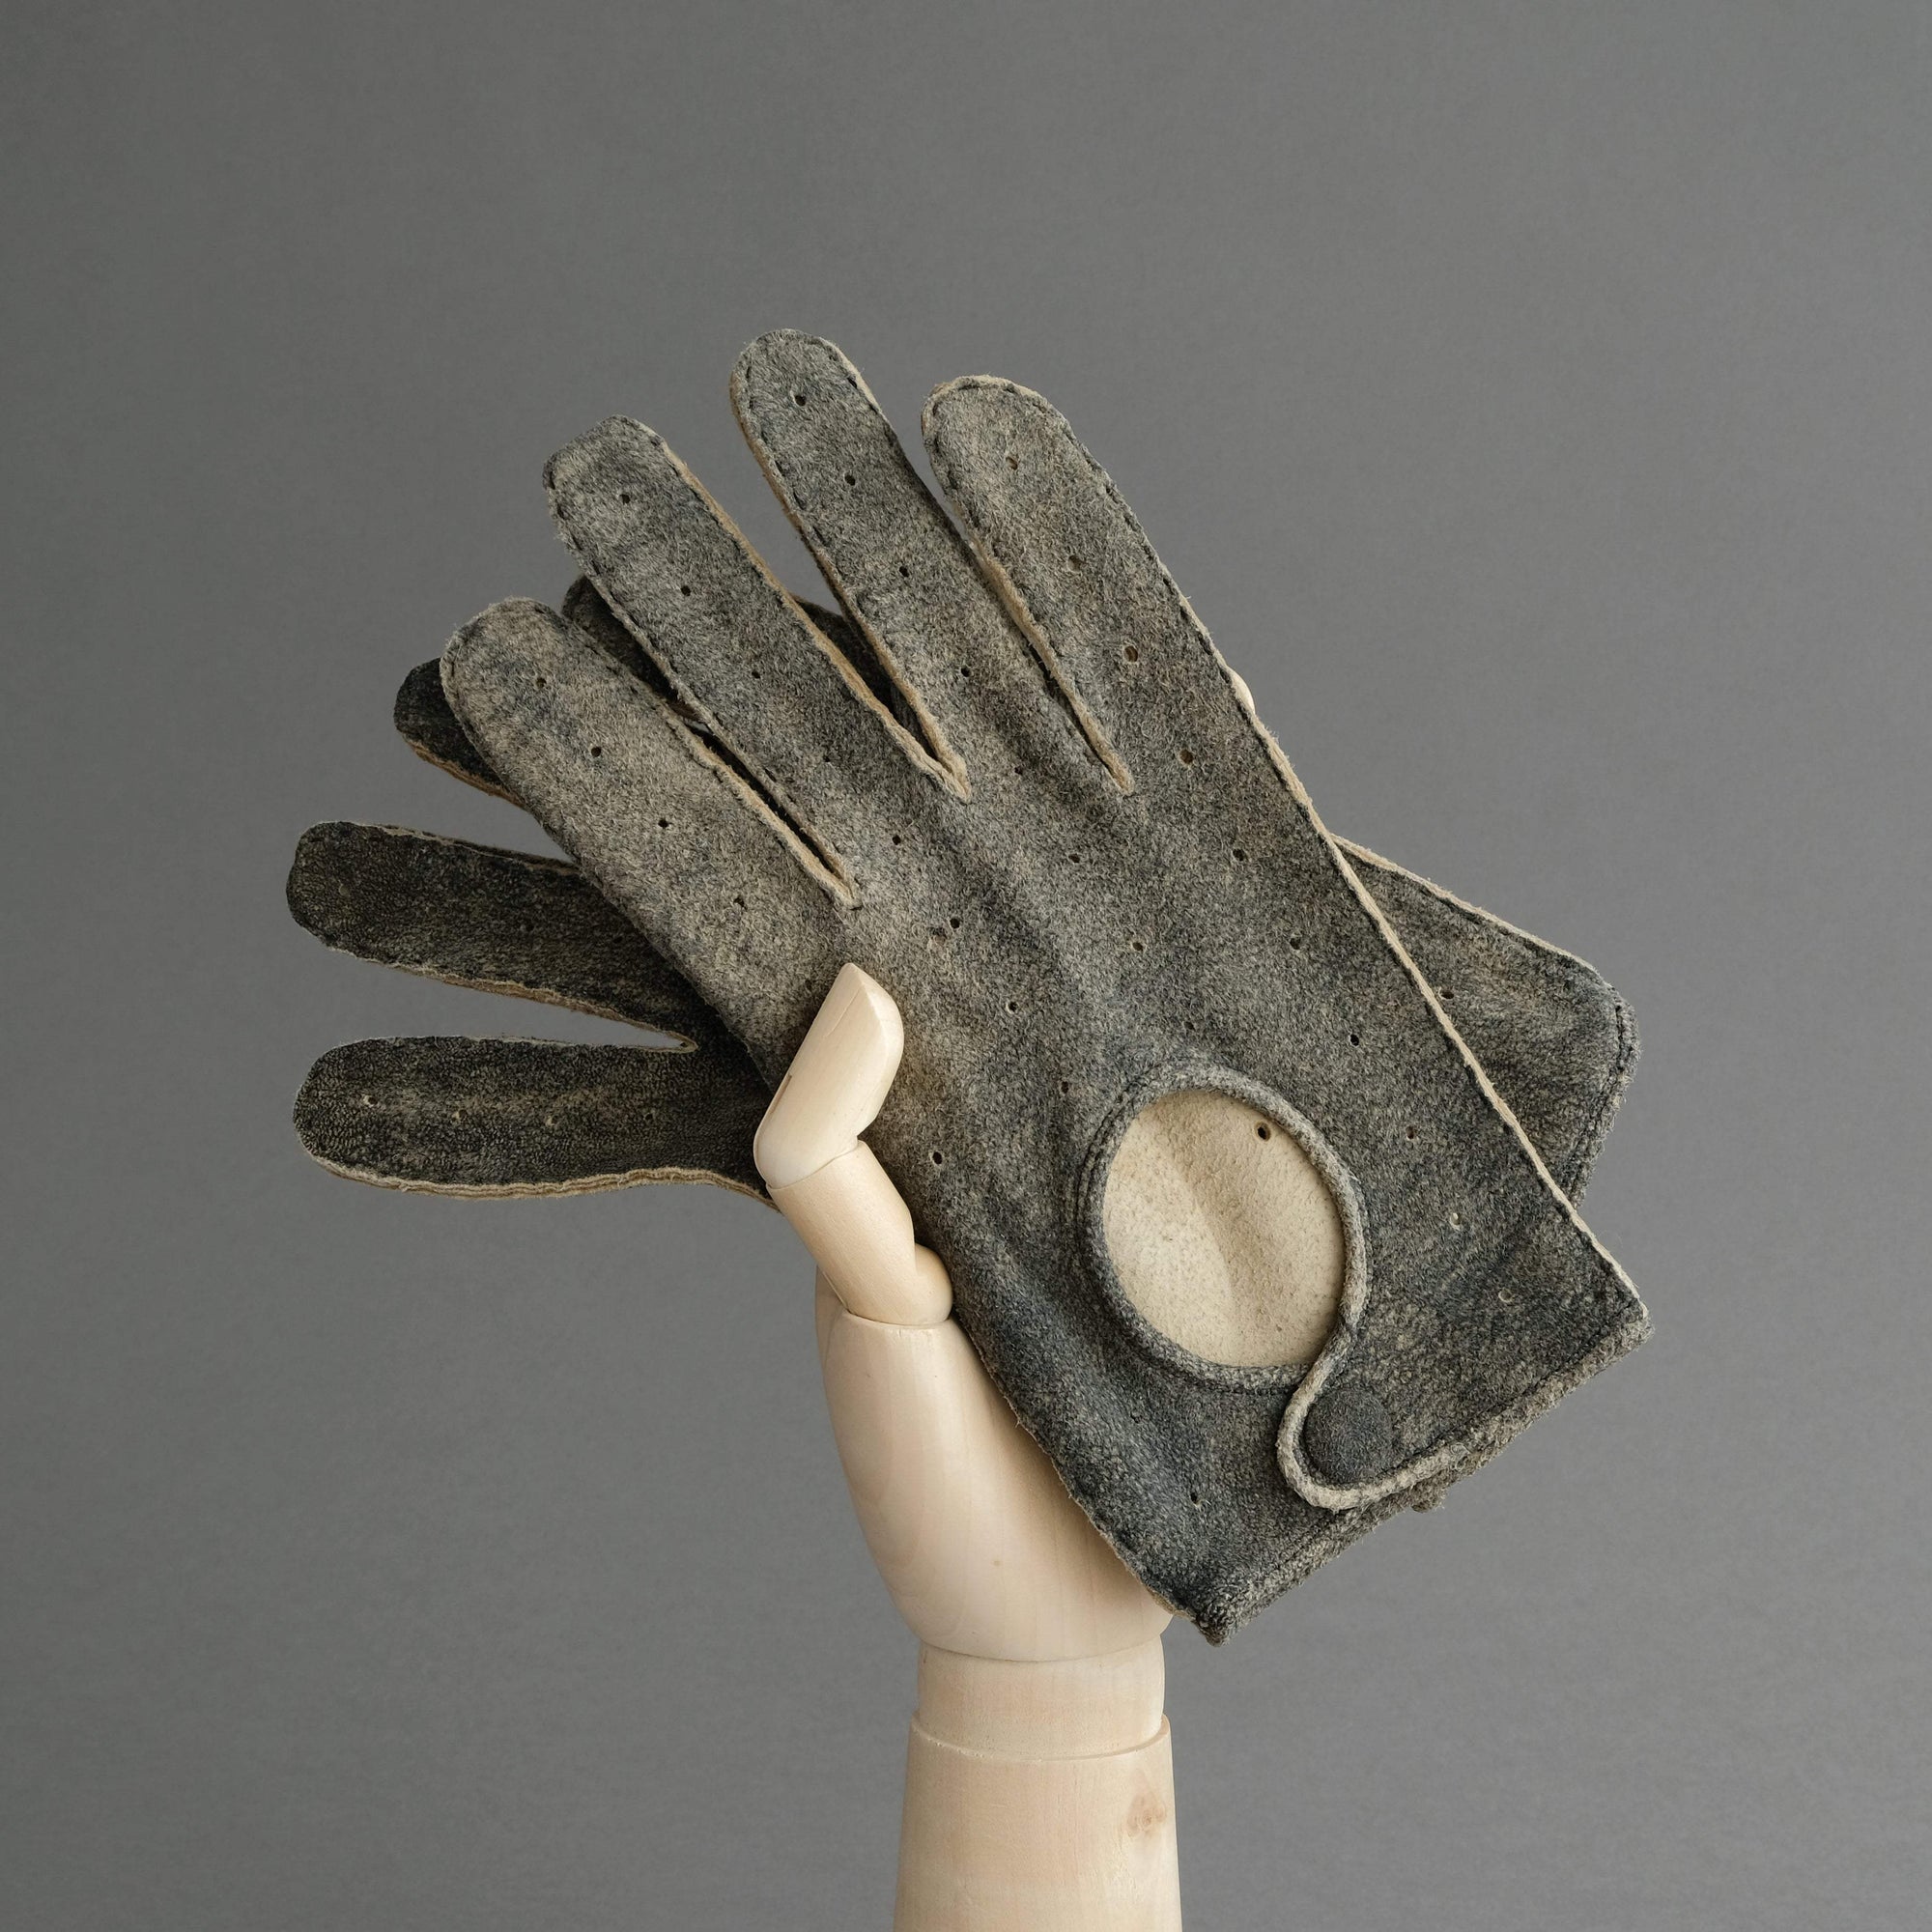 Gentlemen's Unlined Driving Gloves from Walnut Goatskin - TR Handschuhe Wien - Thomas Riemer Handmade Gloves